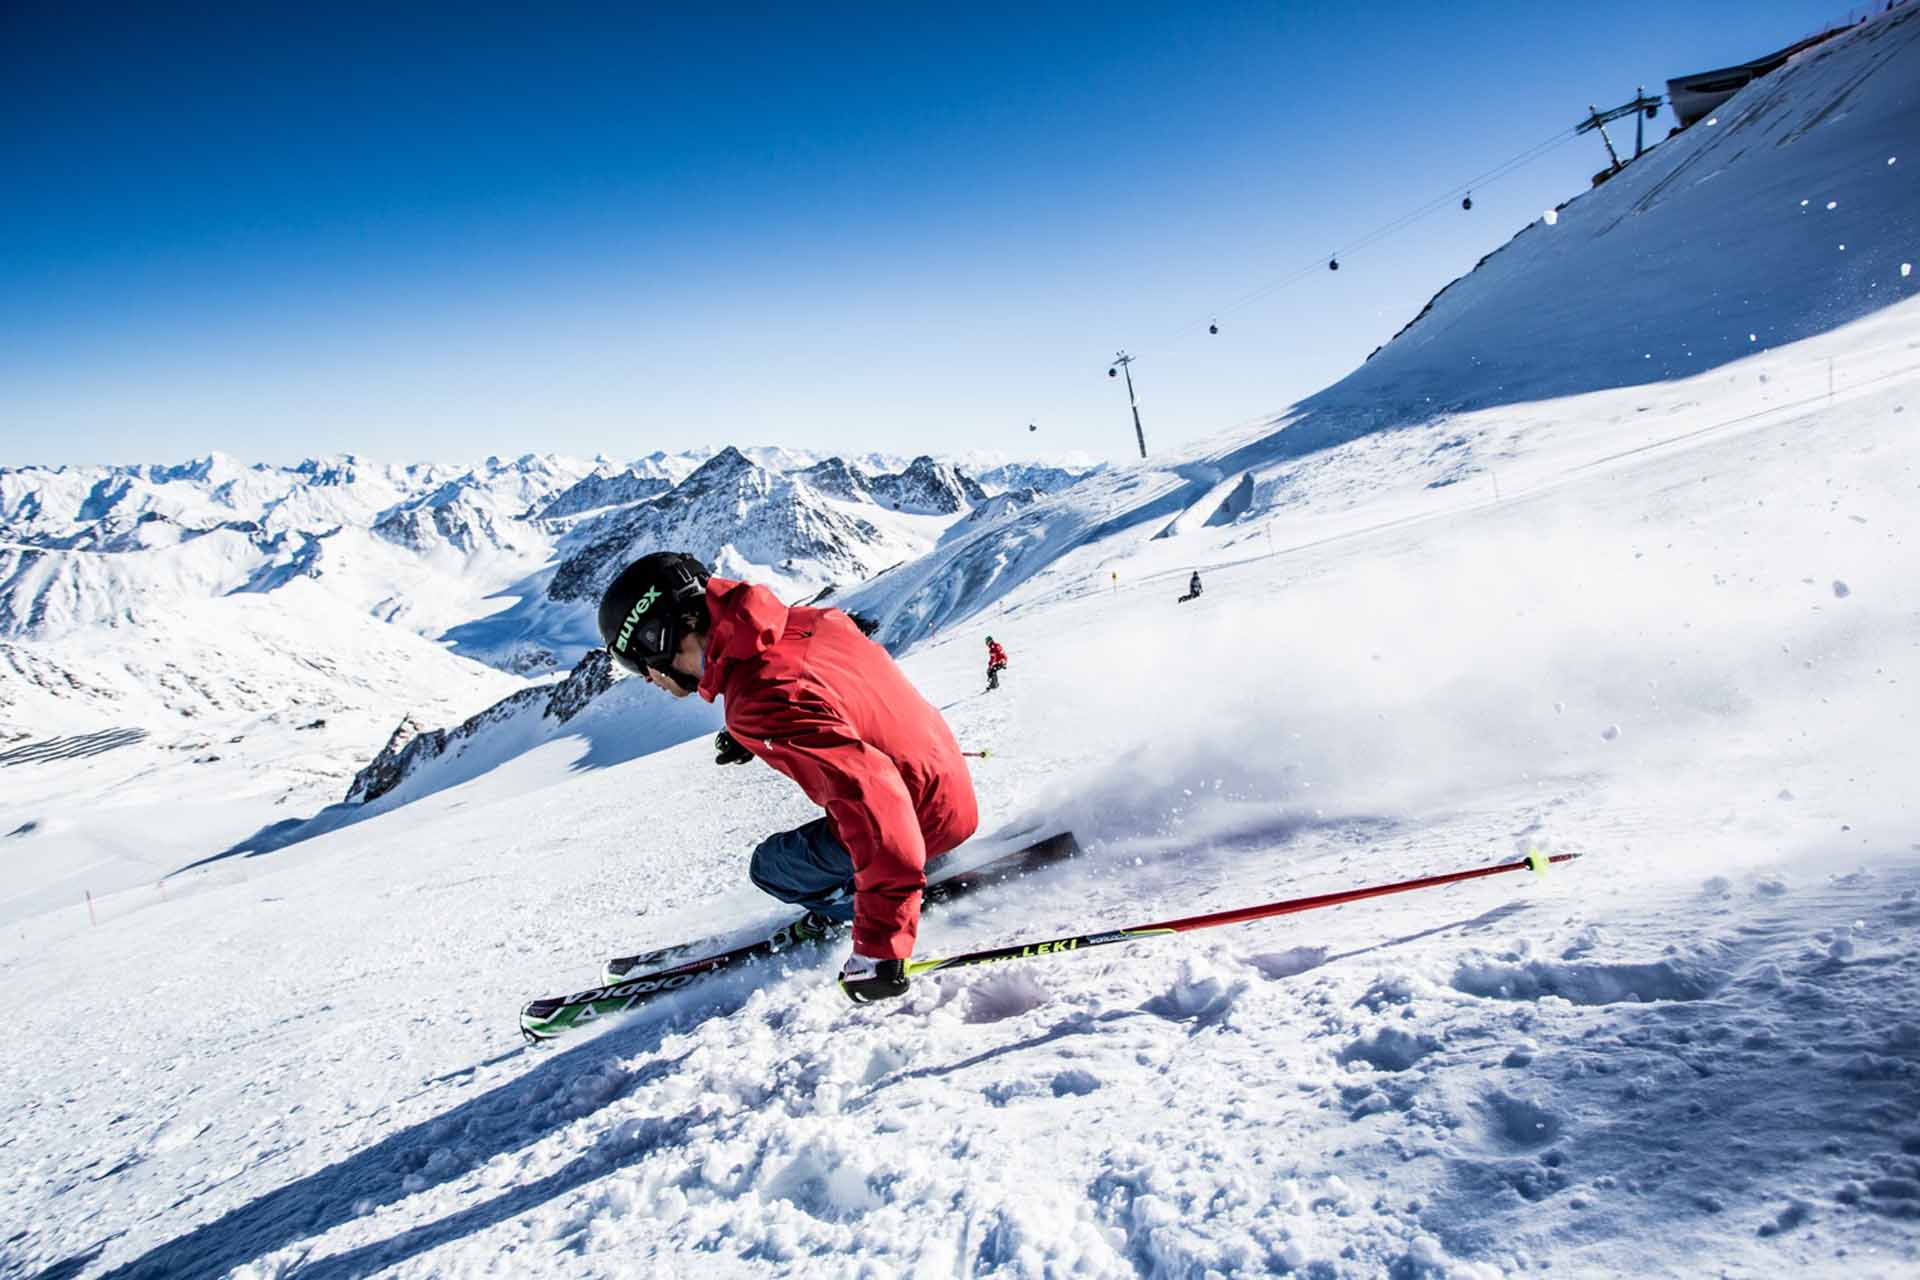 Skiing on the Pitztal Glacier in Tyrol